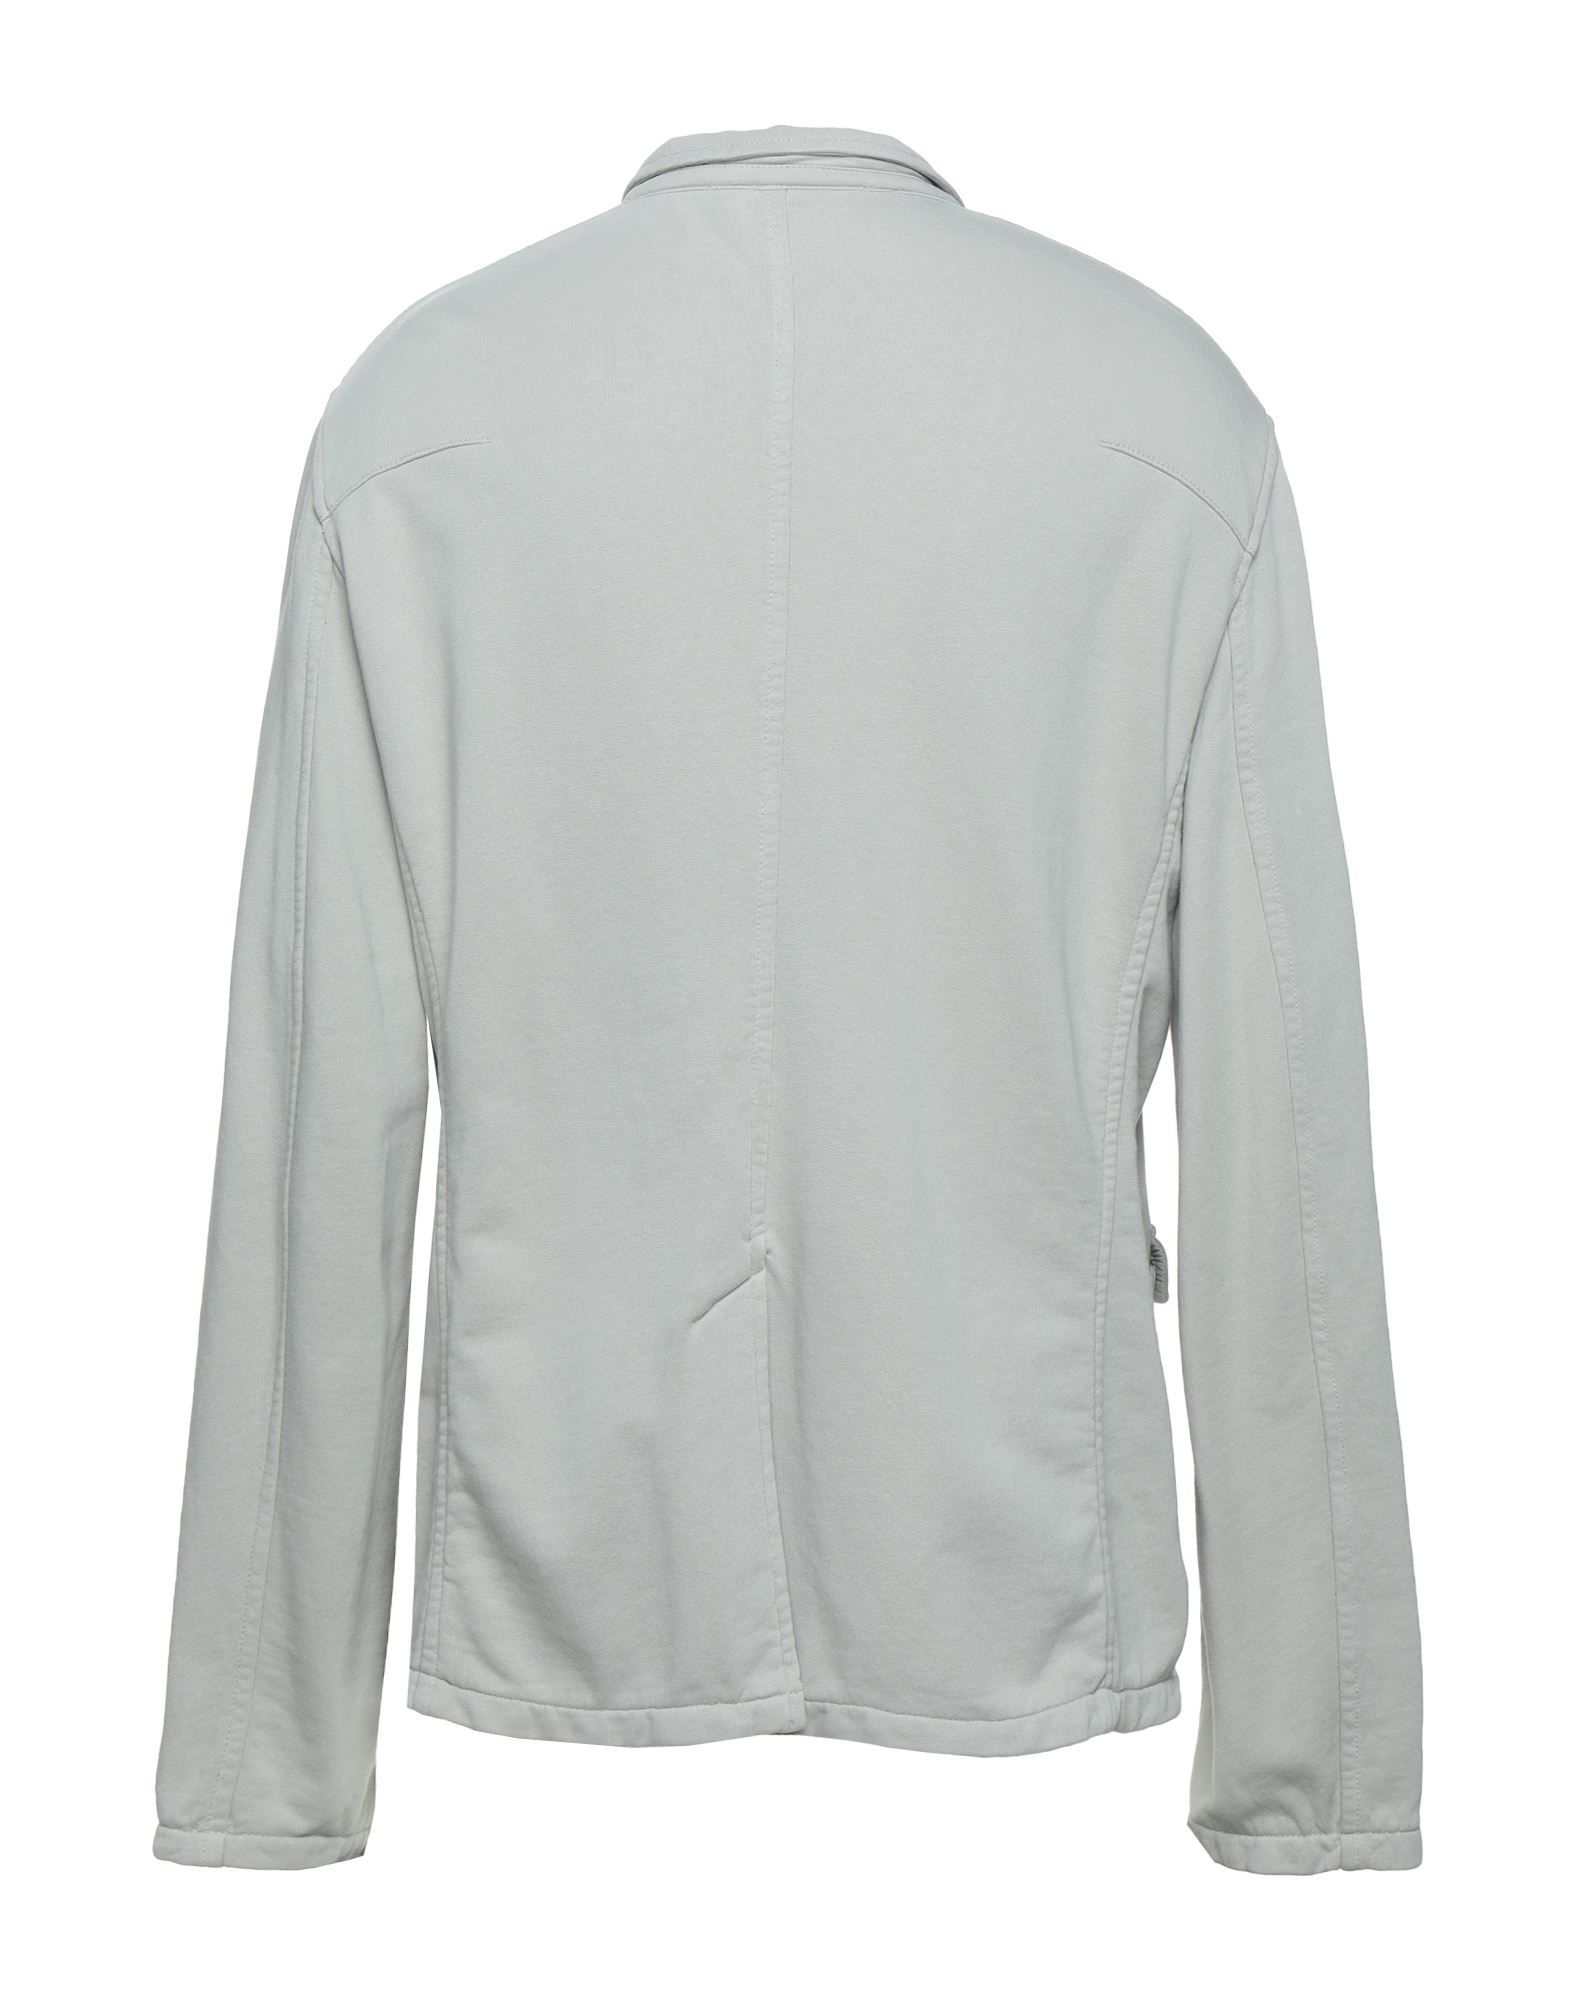 sweatshirt fleece, no appliqués, solid colour, lapel collar, long sleeves, single-breasted , multipockets, zipper closure, unlined, back split